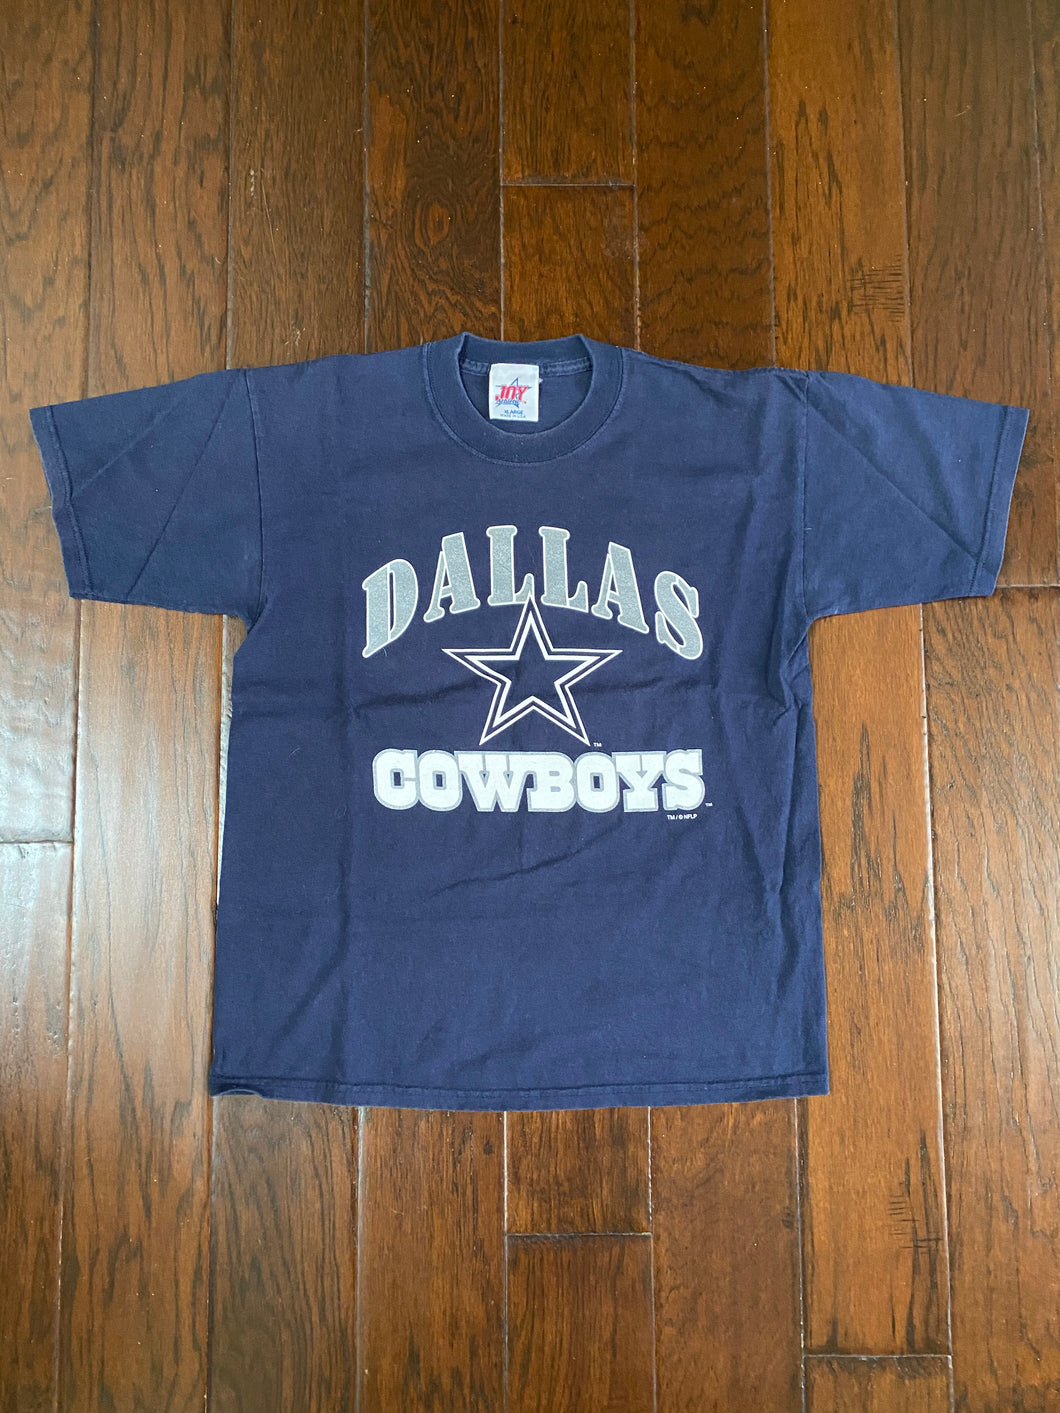 Dallas Cowboys 1998 “Emmitt Smith #22” Vintage Distressed T-shirt